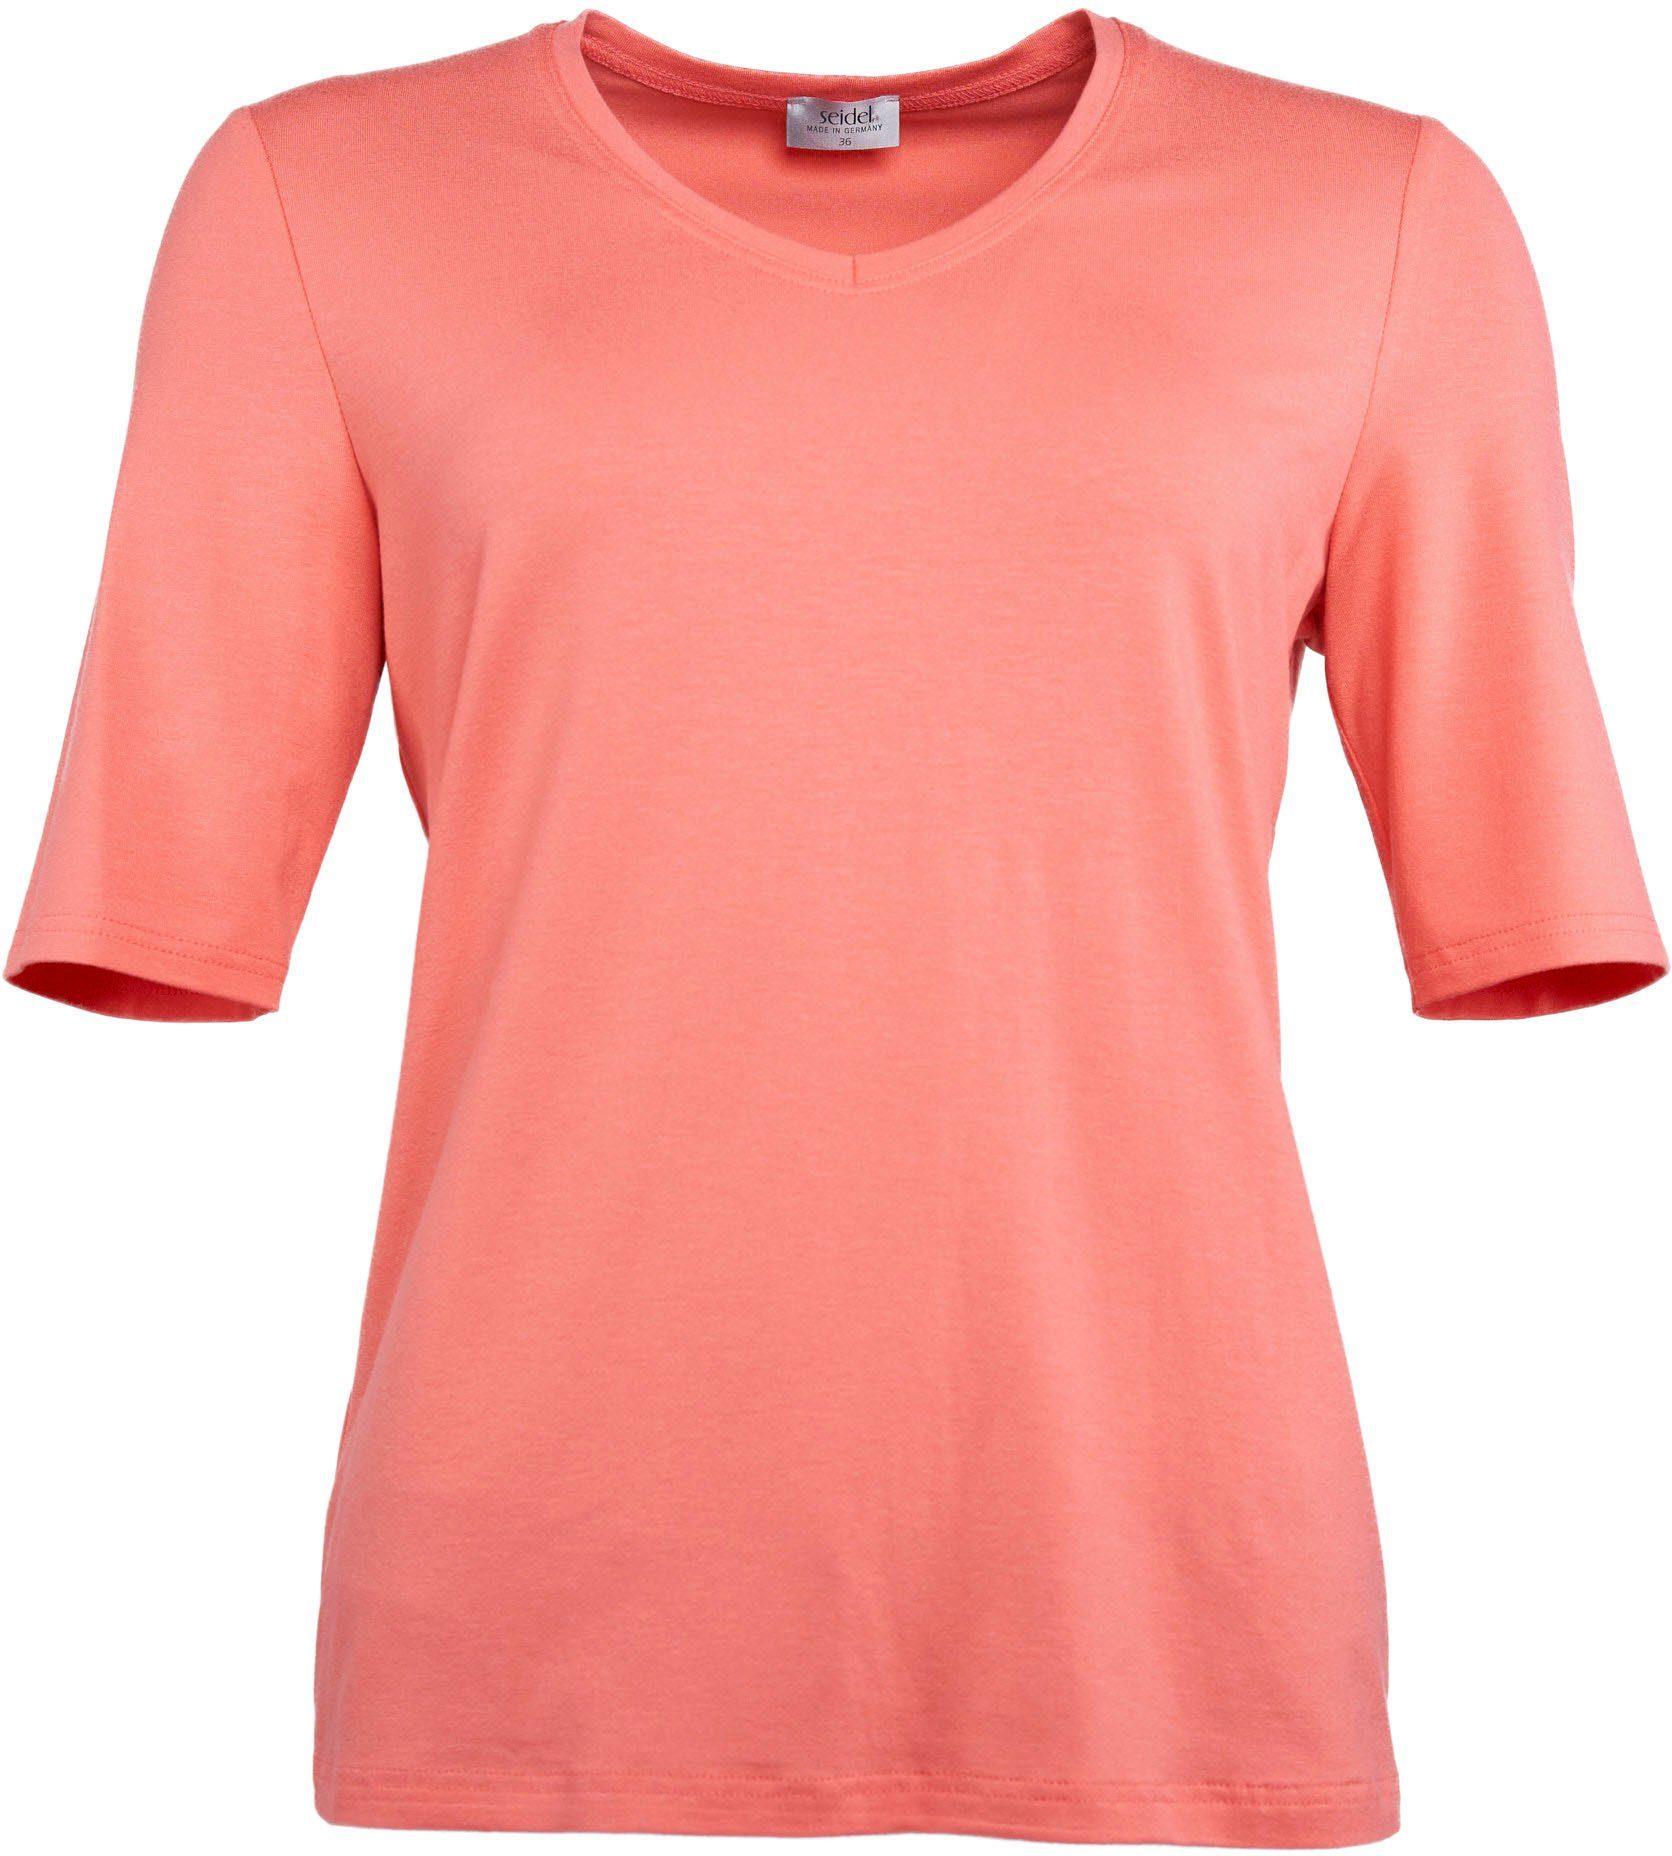 Seidel Moden V-Shirt mit Halbarm GERMANY apricot MADE IN aus Material, softem